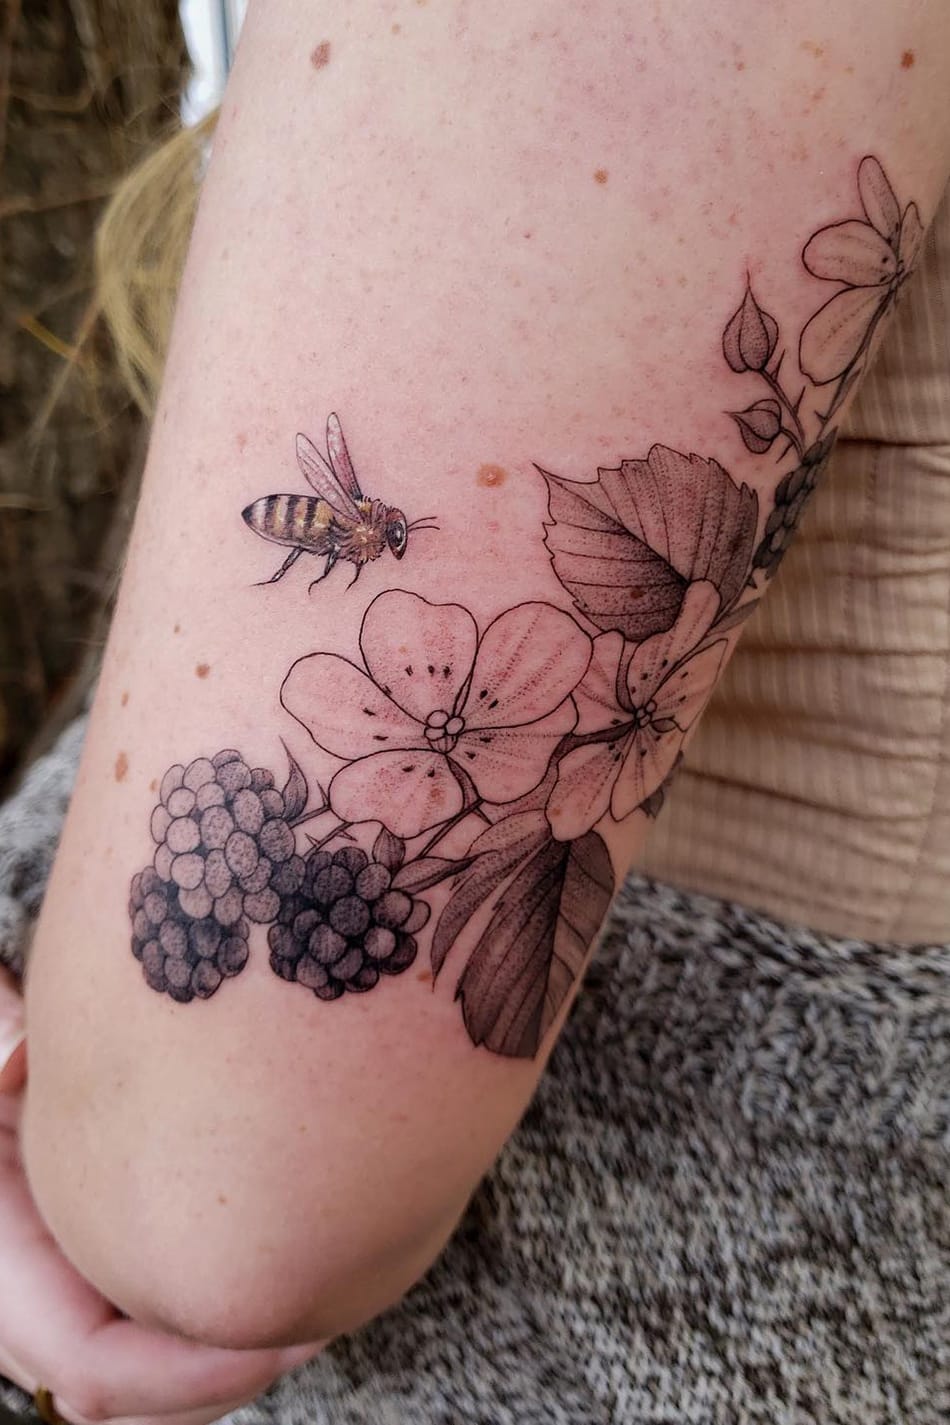 Bee tattoo on arm